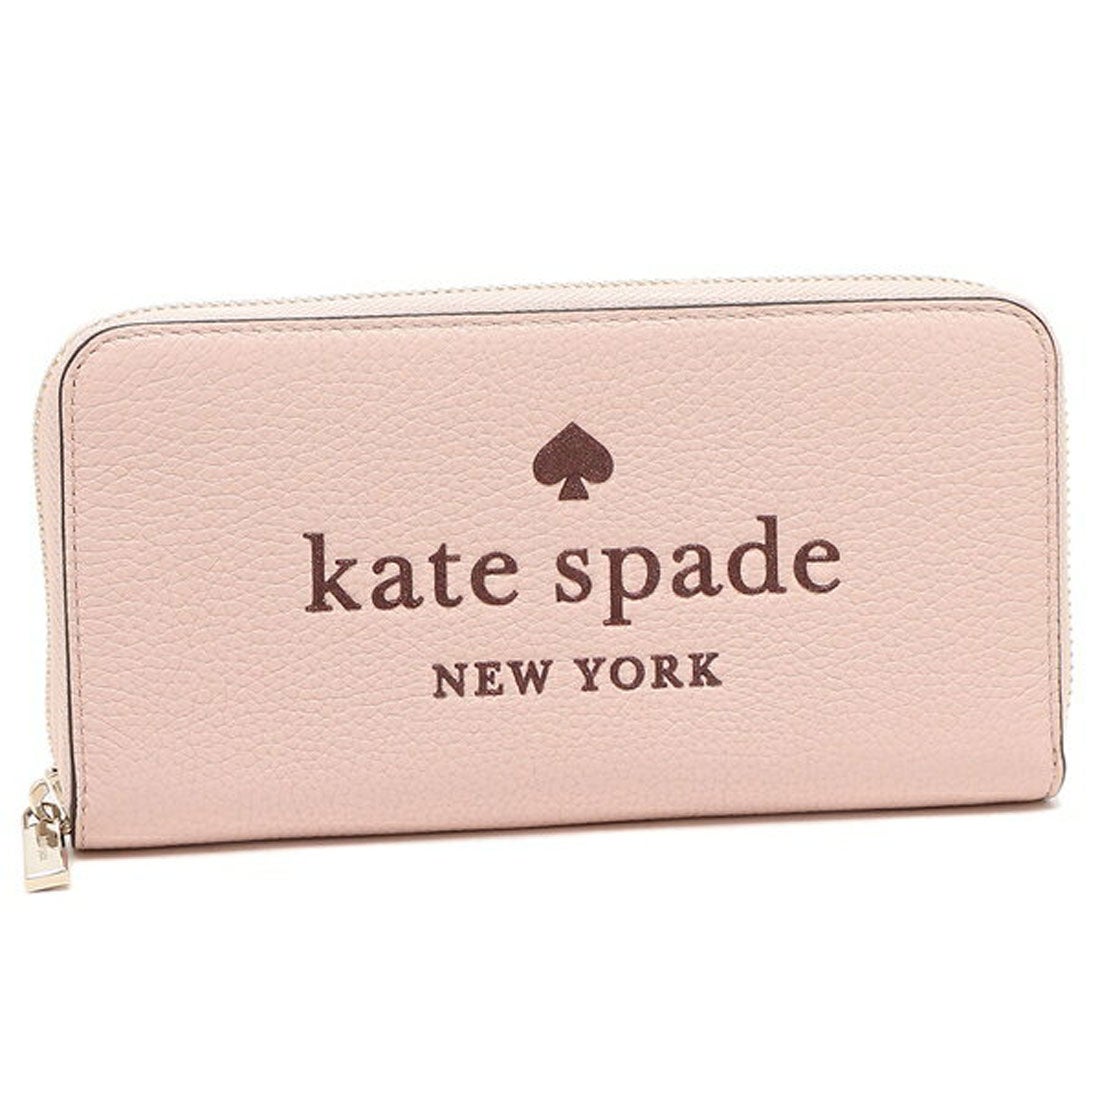 kate spade new york ライトピンク 長財布 - 長財布